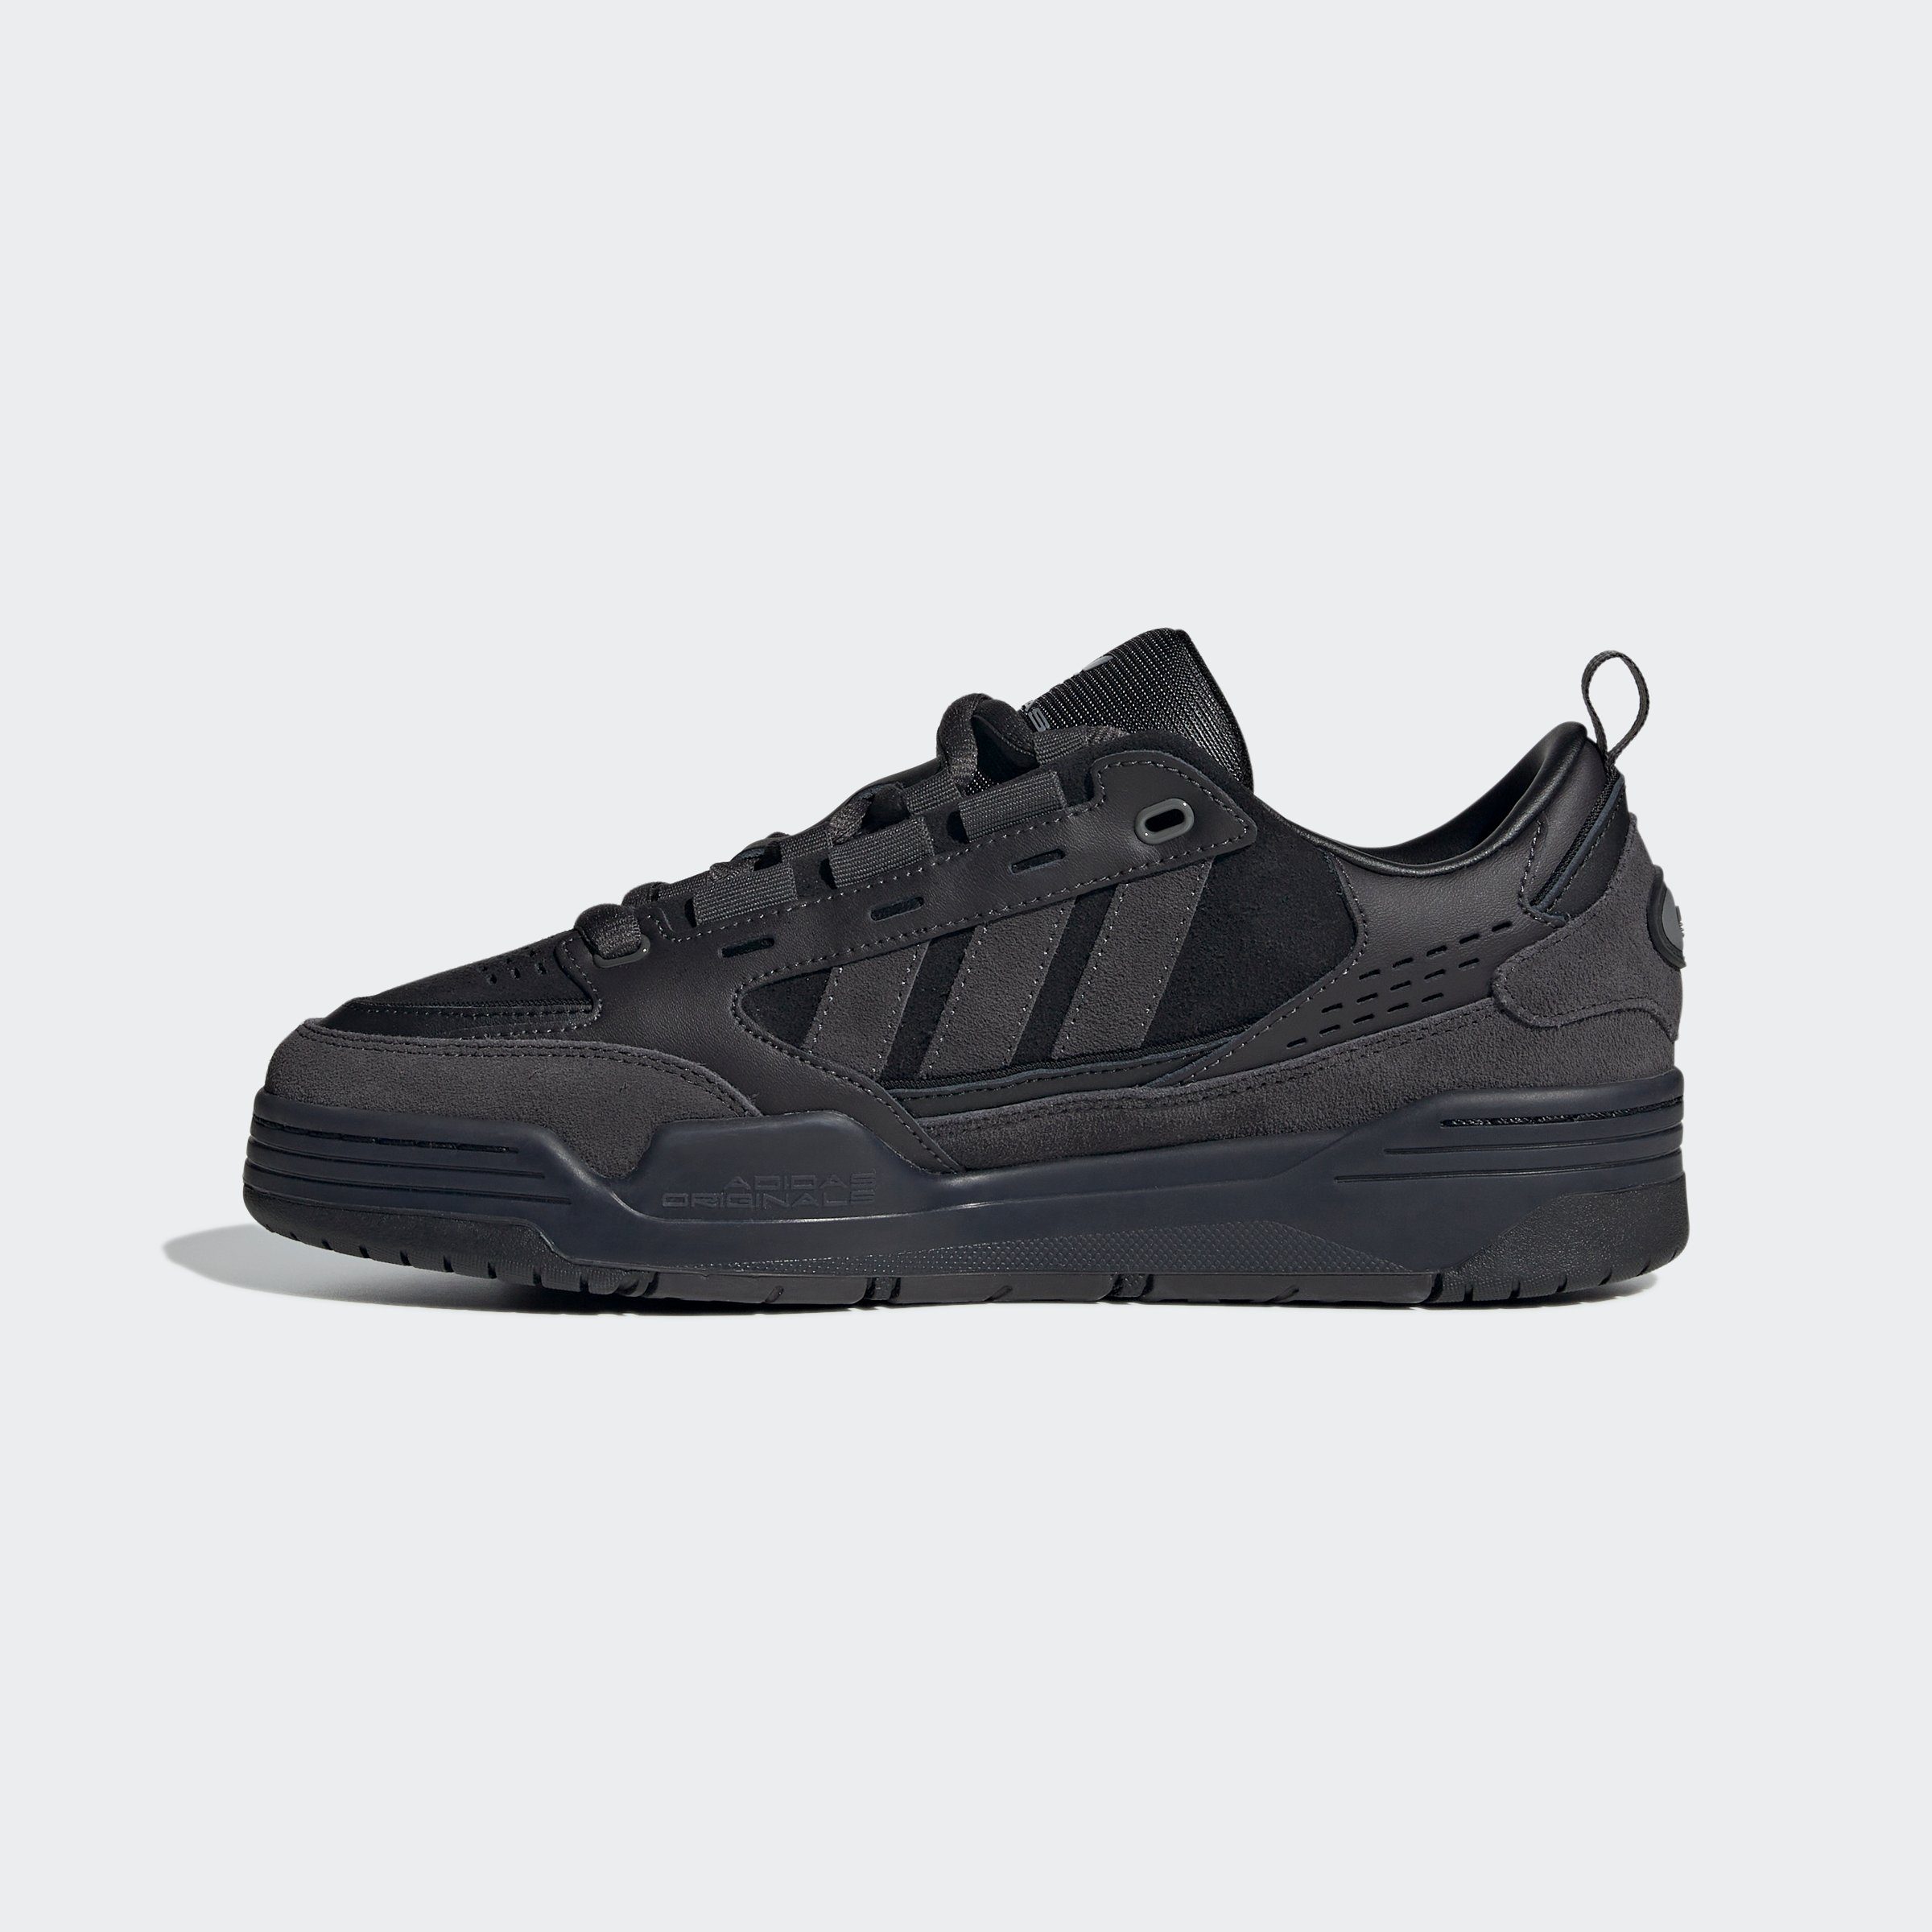 Black ADI2000 Originals / Black Core Black Sneaker Utility Utility adidas /